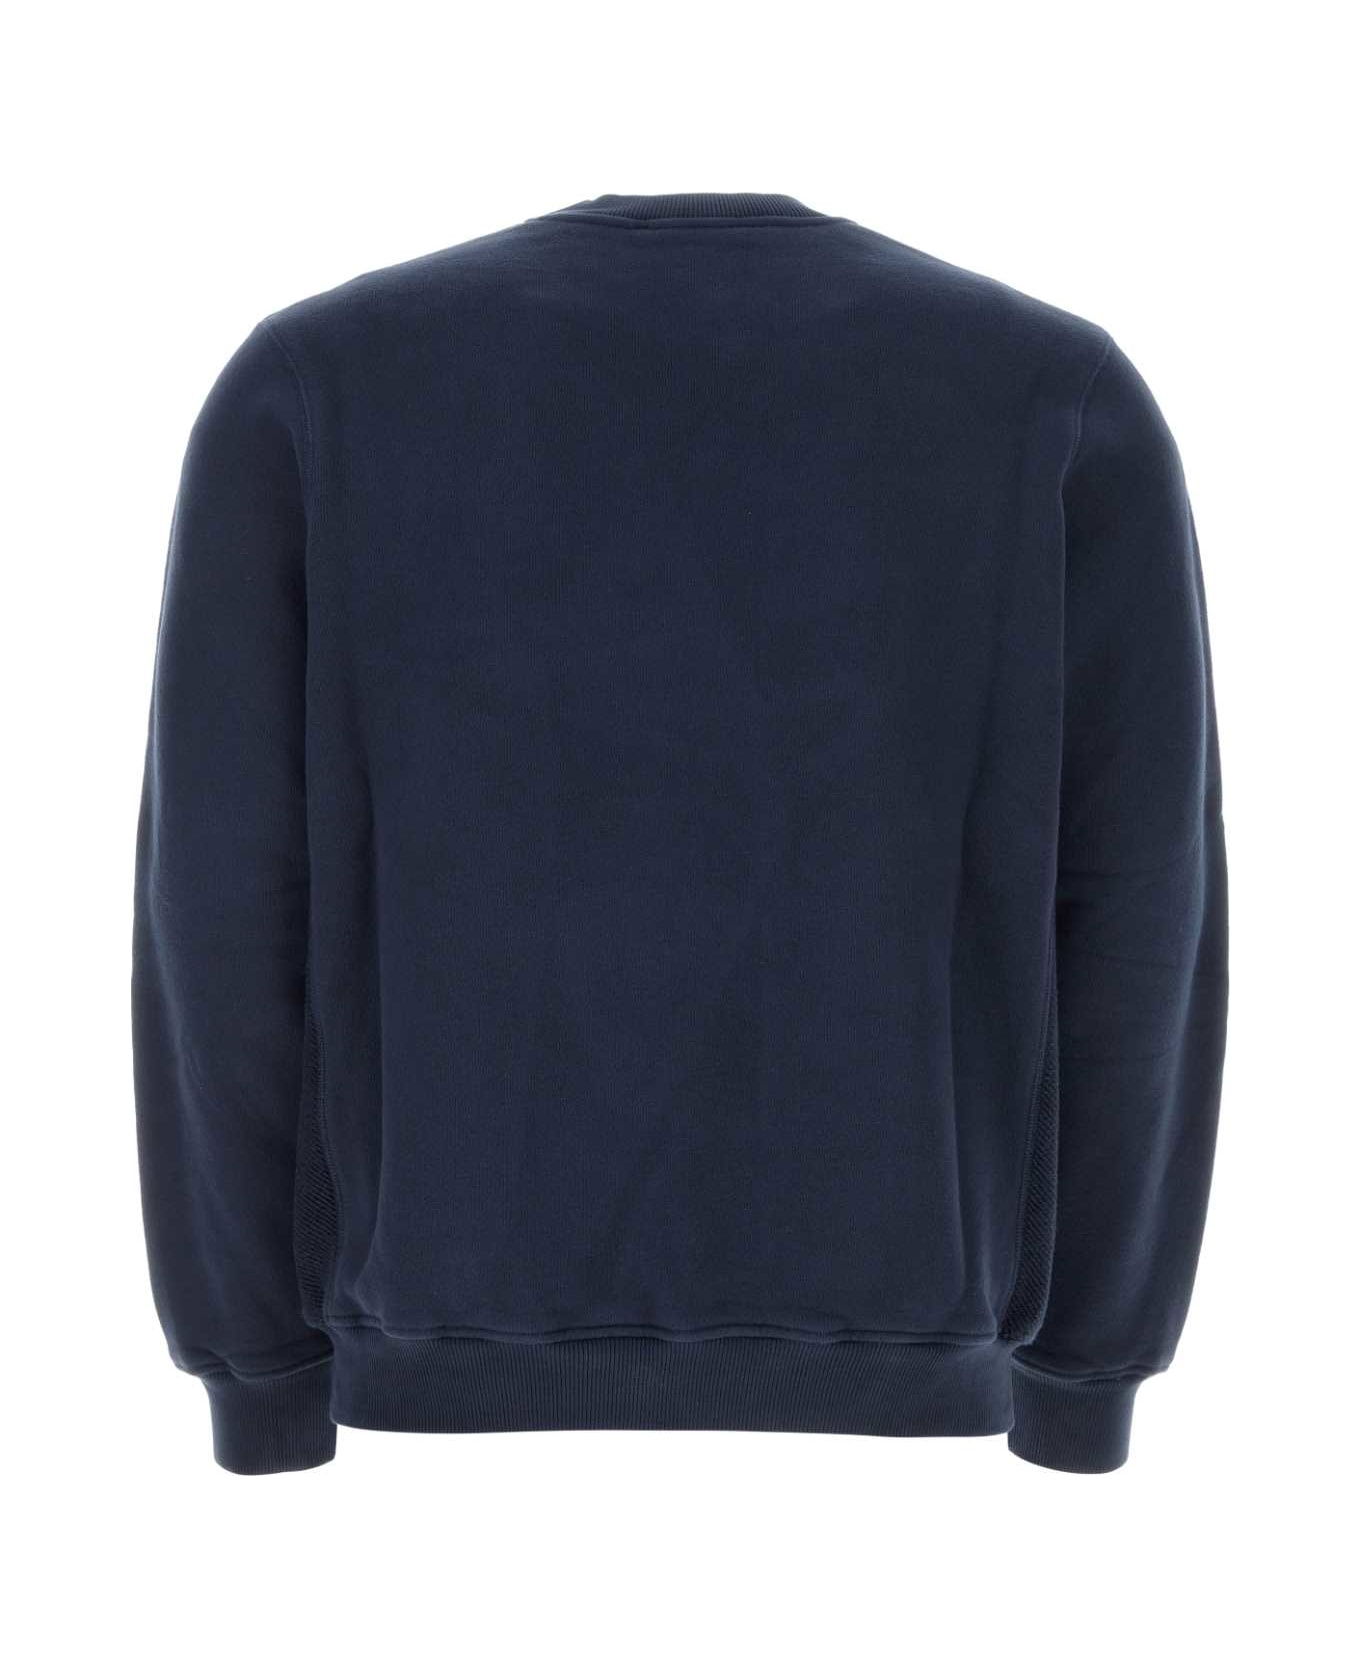 Casablanca Navy Blue Cotton Sweatshirt - SOFSPILOONAV フリース